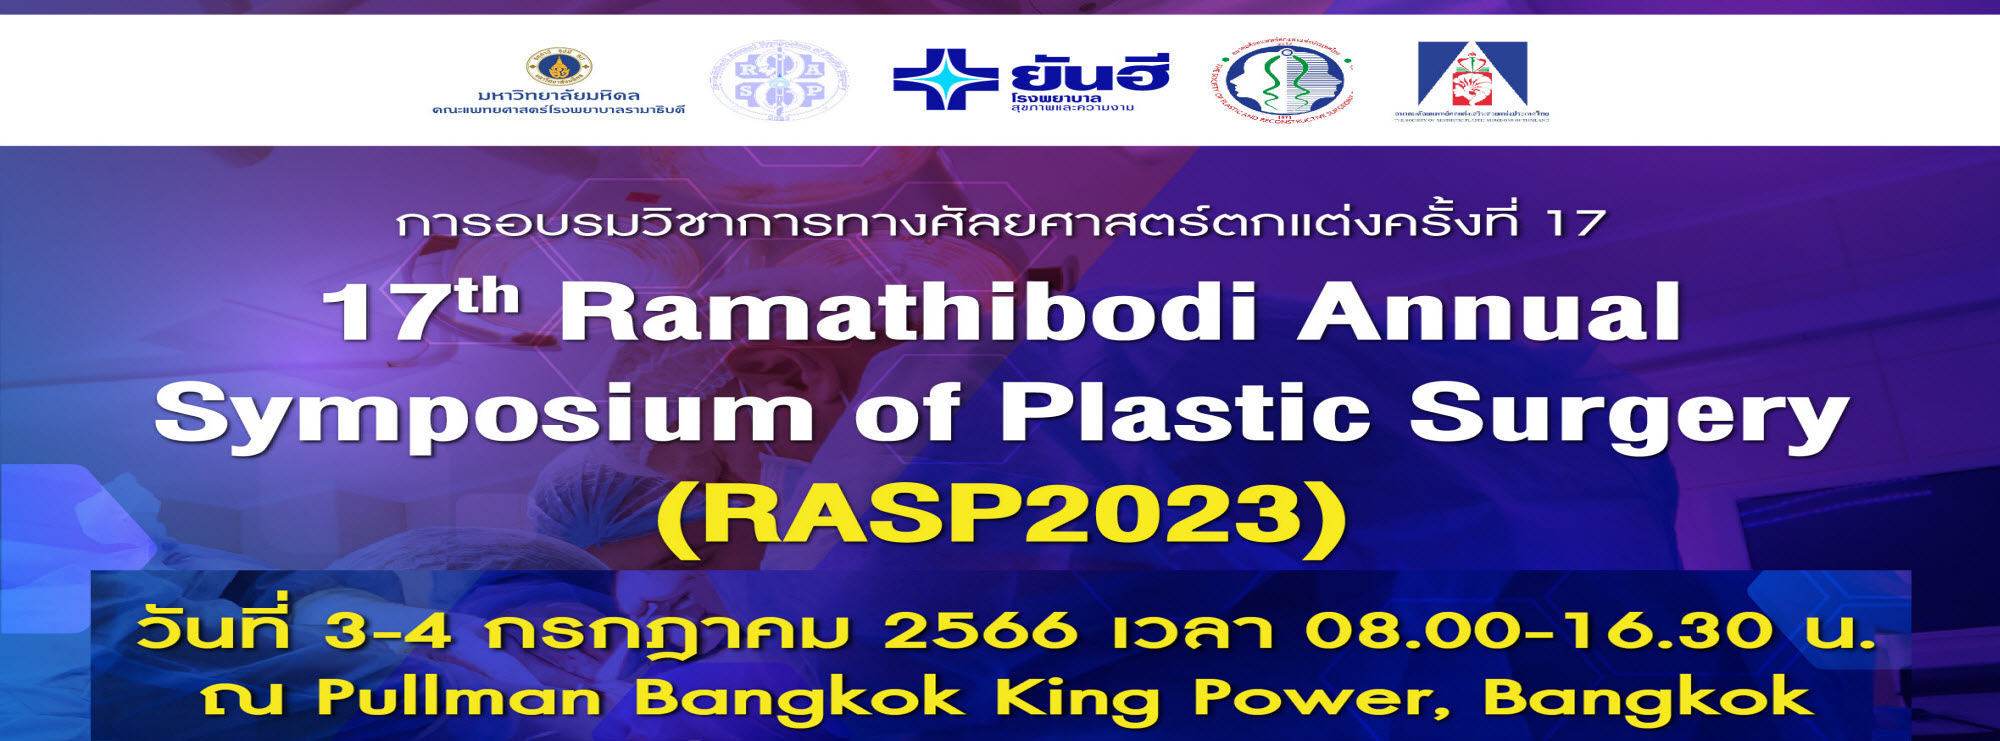 17th Ramathibodi Annual Symposium of Plastic Surgery